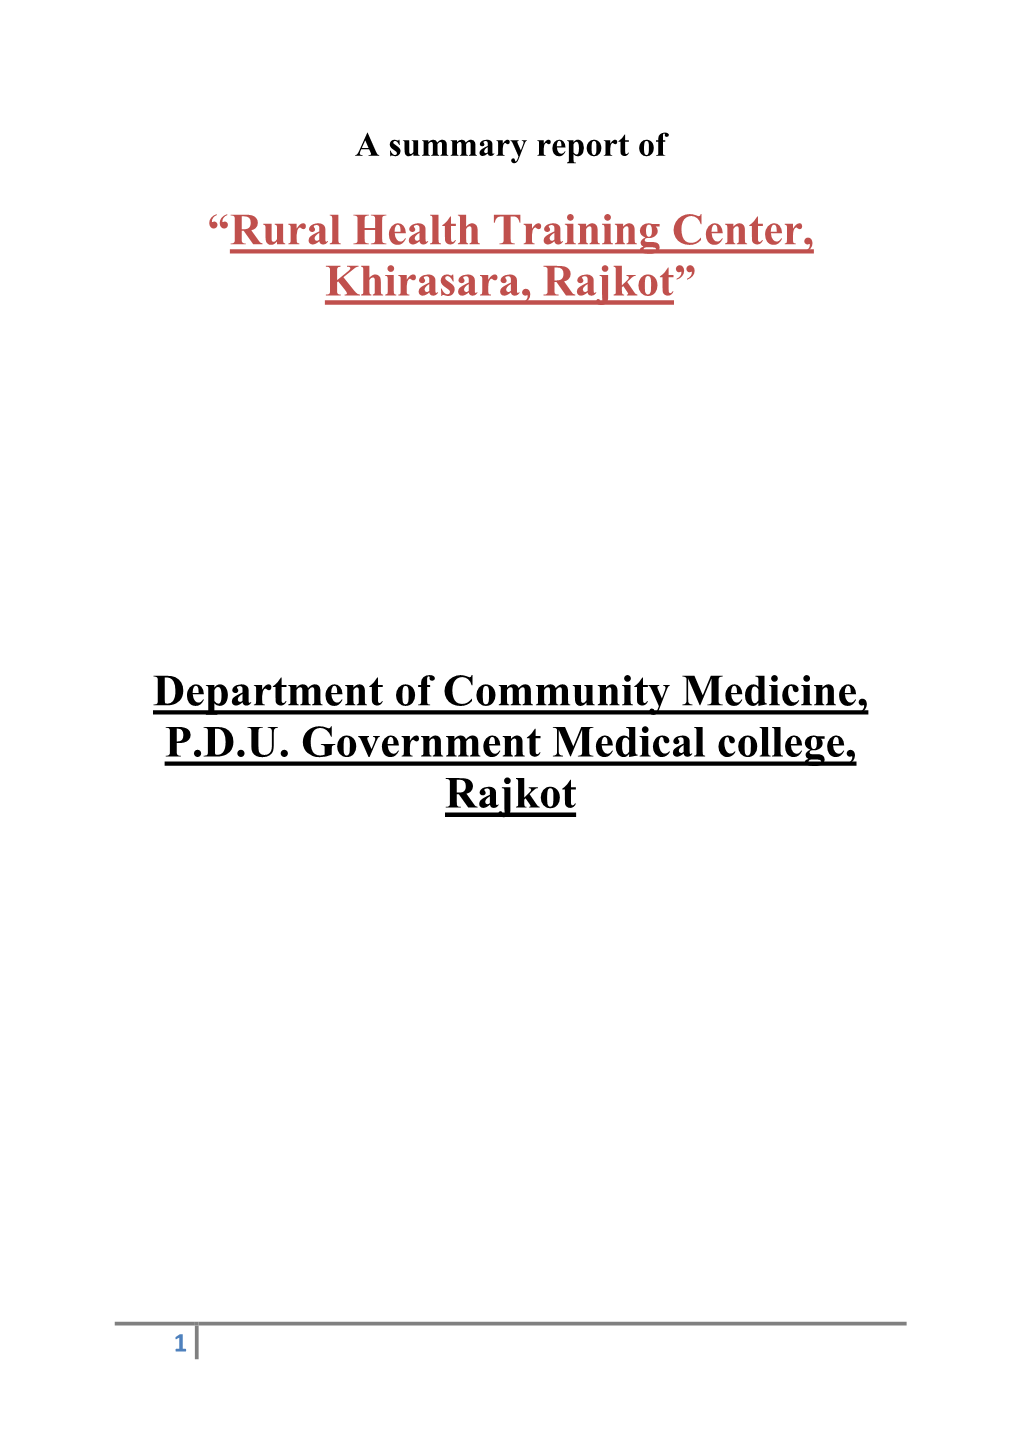 “Rural Health Training Center, Khirasara, Rajkot” Department of Community Medicine, P.D.U. Government Medical College, Rajko